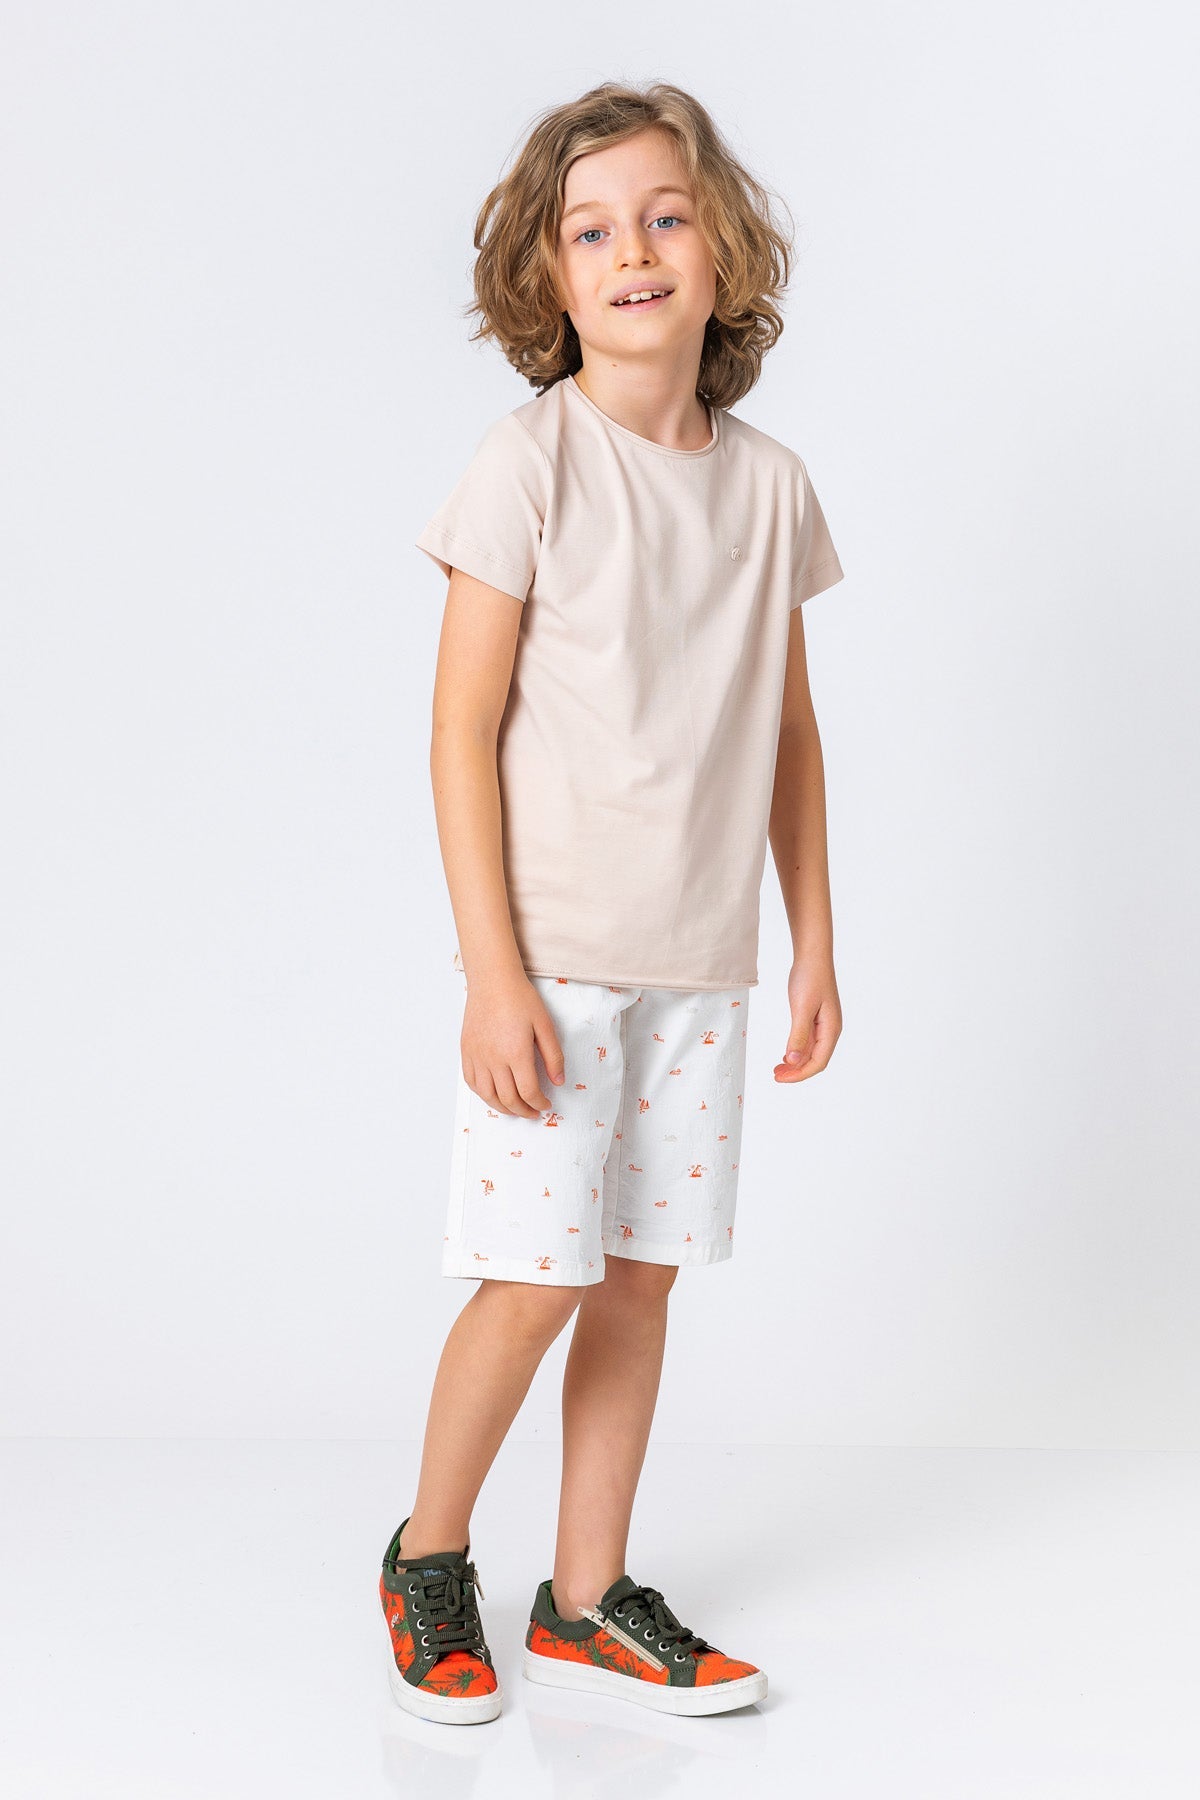 Boys Solid Neck Short Kids Round T-Shirt Basic InCity Sleeve Plain